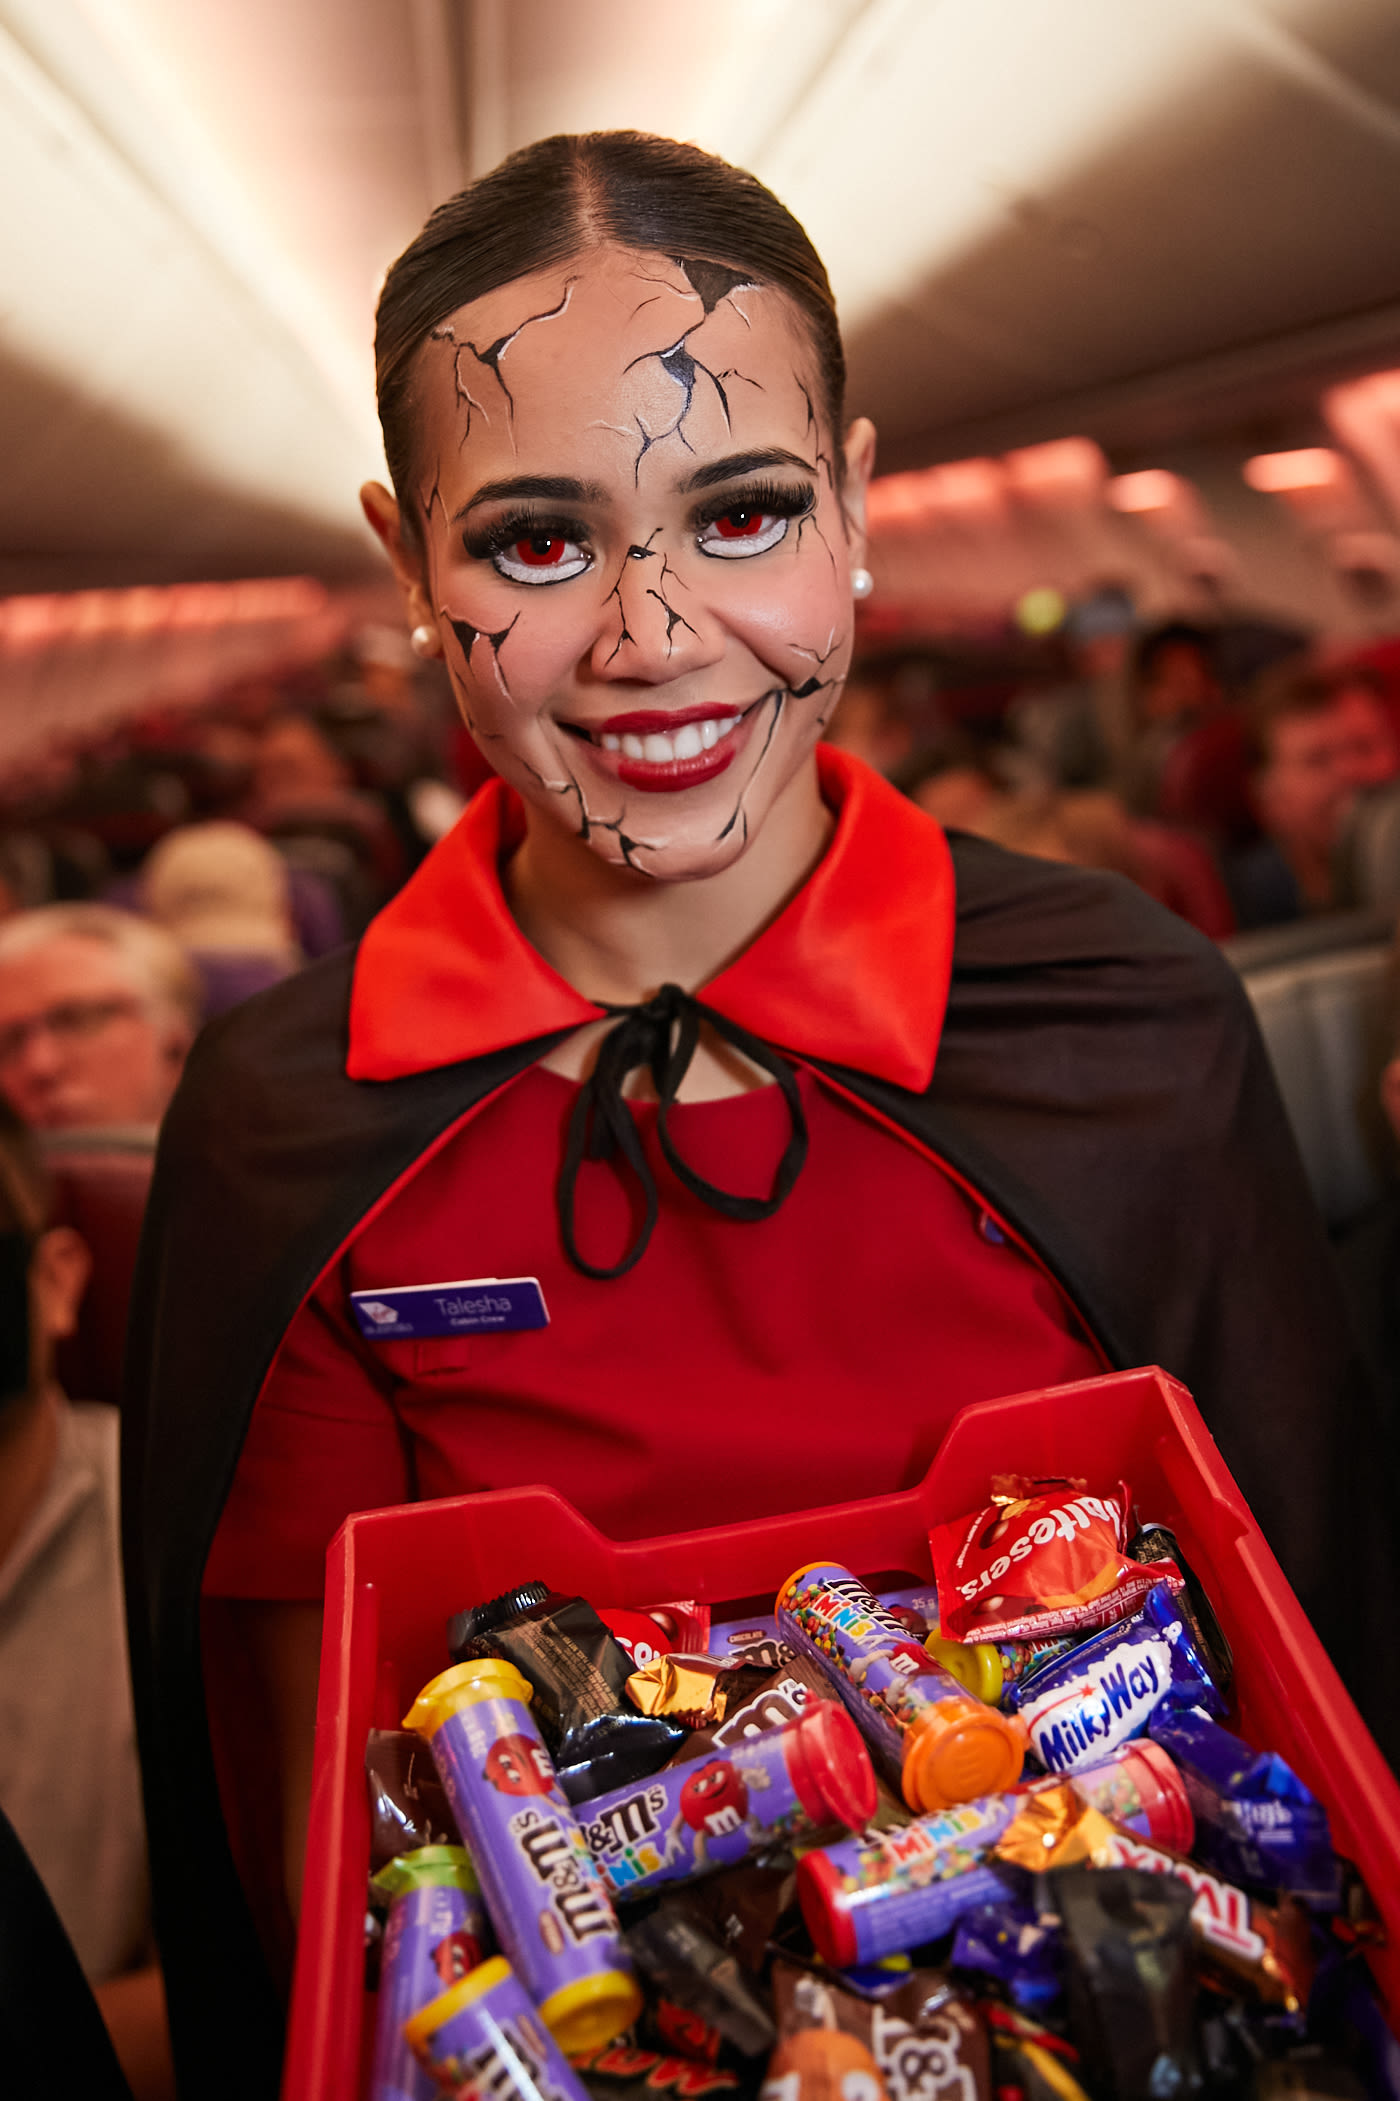 Virgin Australia cabin crew in Halloween fancy dress holding a tray of Mars Wrigley treats, stood in the aisle of a Virgin Australia plane